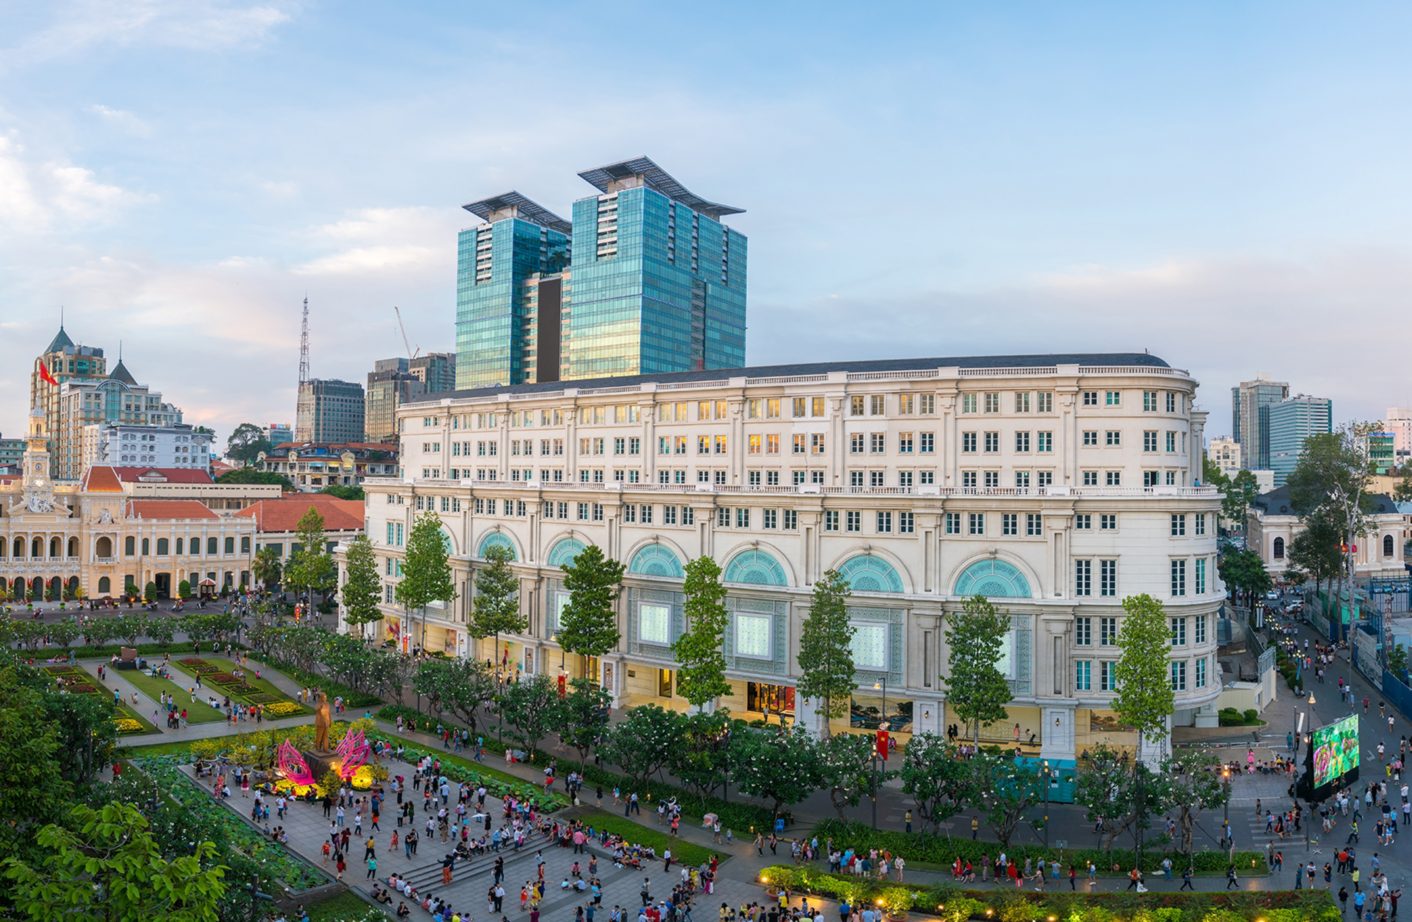 Mandarin Oriental Hotel Group will manage the new Mandarin Oriental Saigon  in Vietnam slated to open in 2020